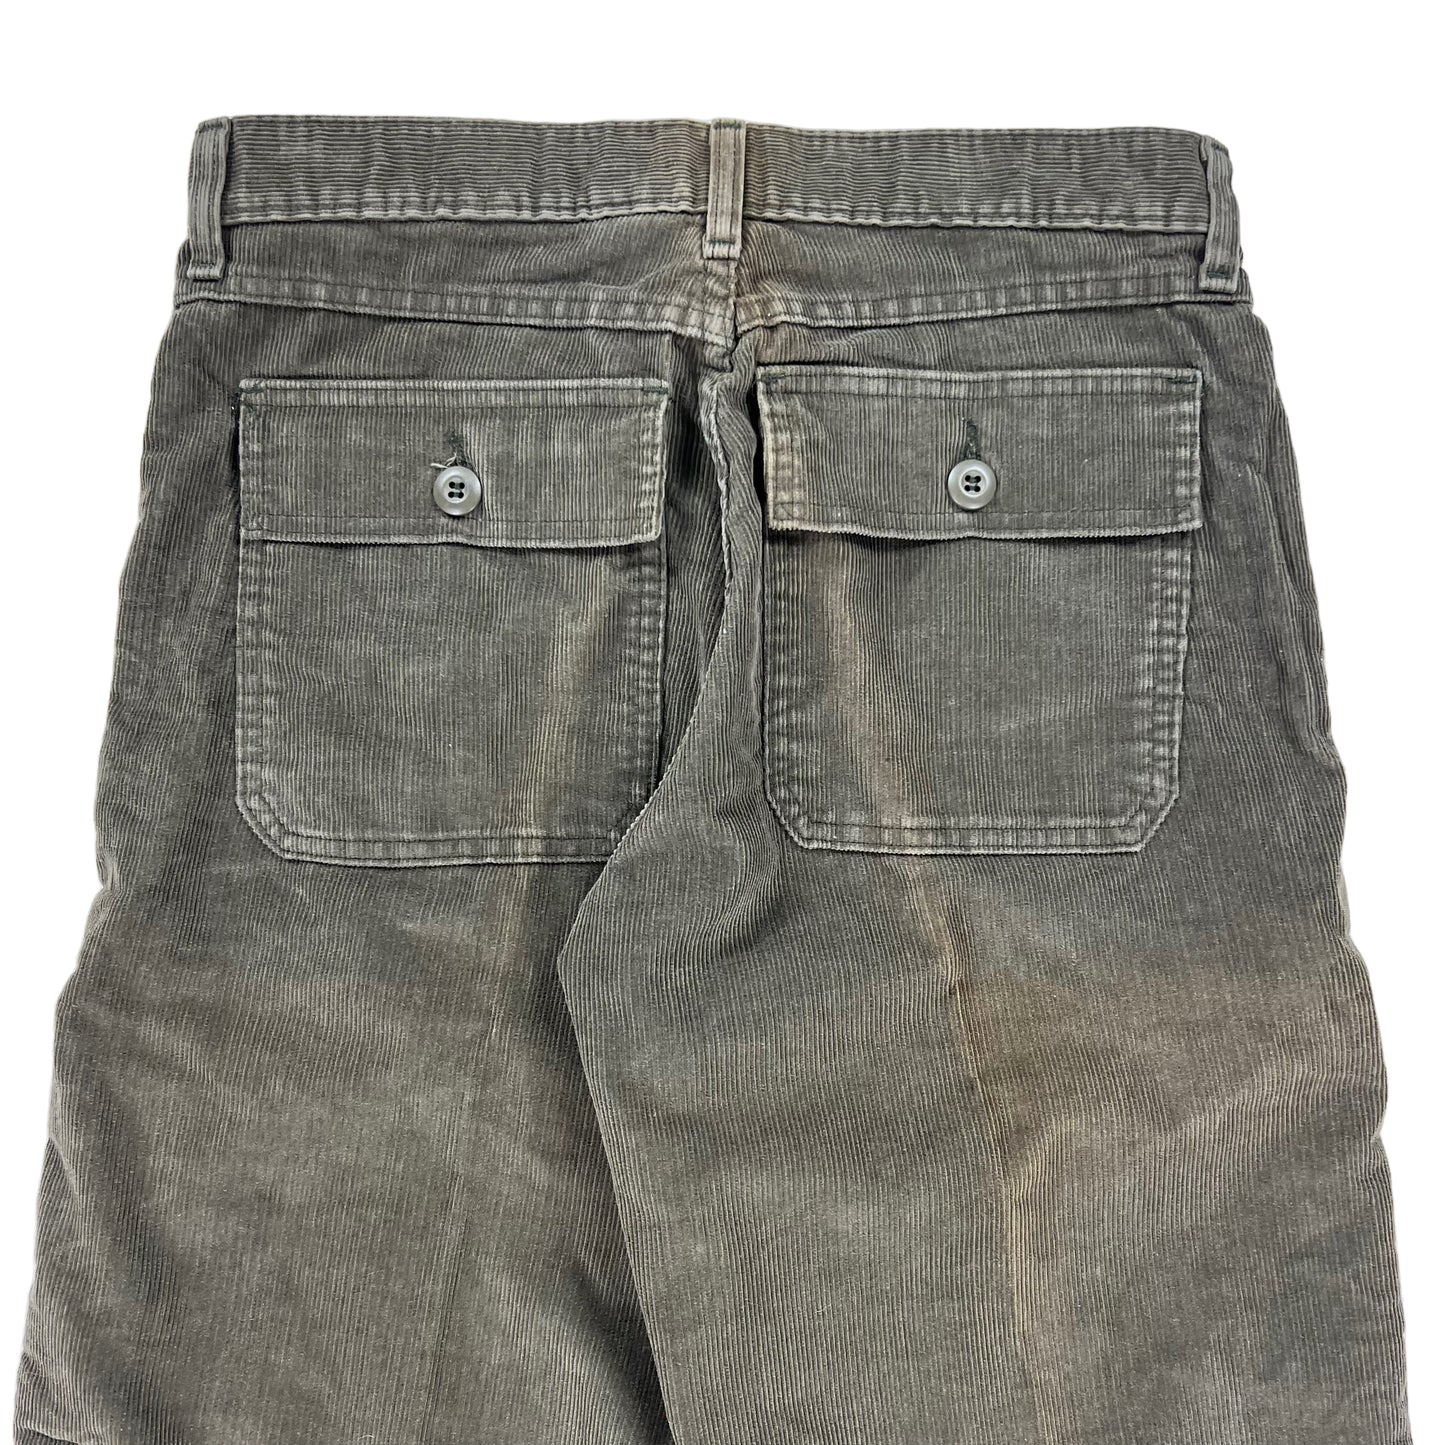 Vintage 90s Abercrombie & Fitch olive corduroy pants (30x31)